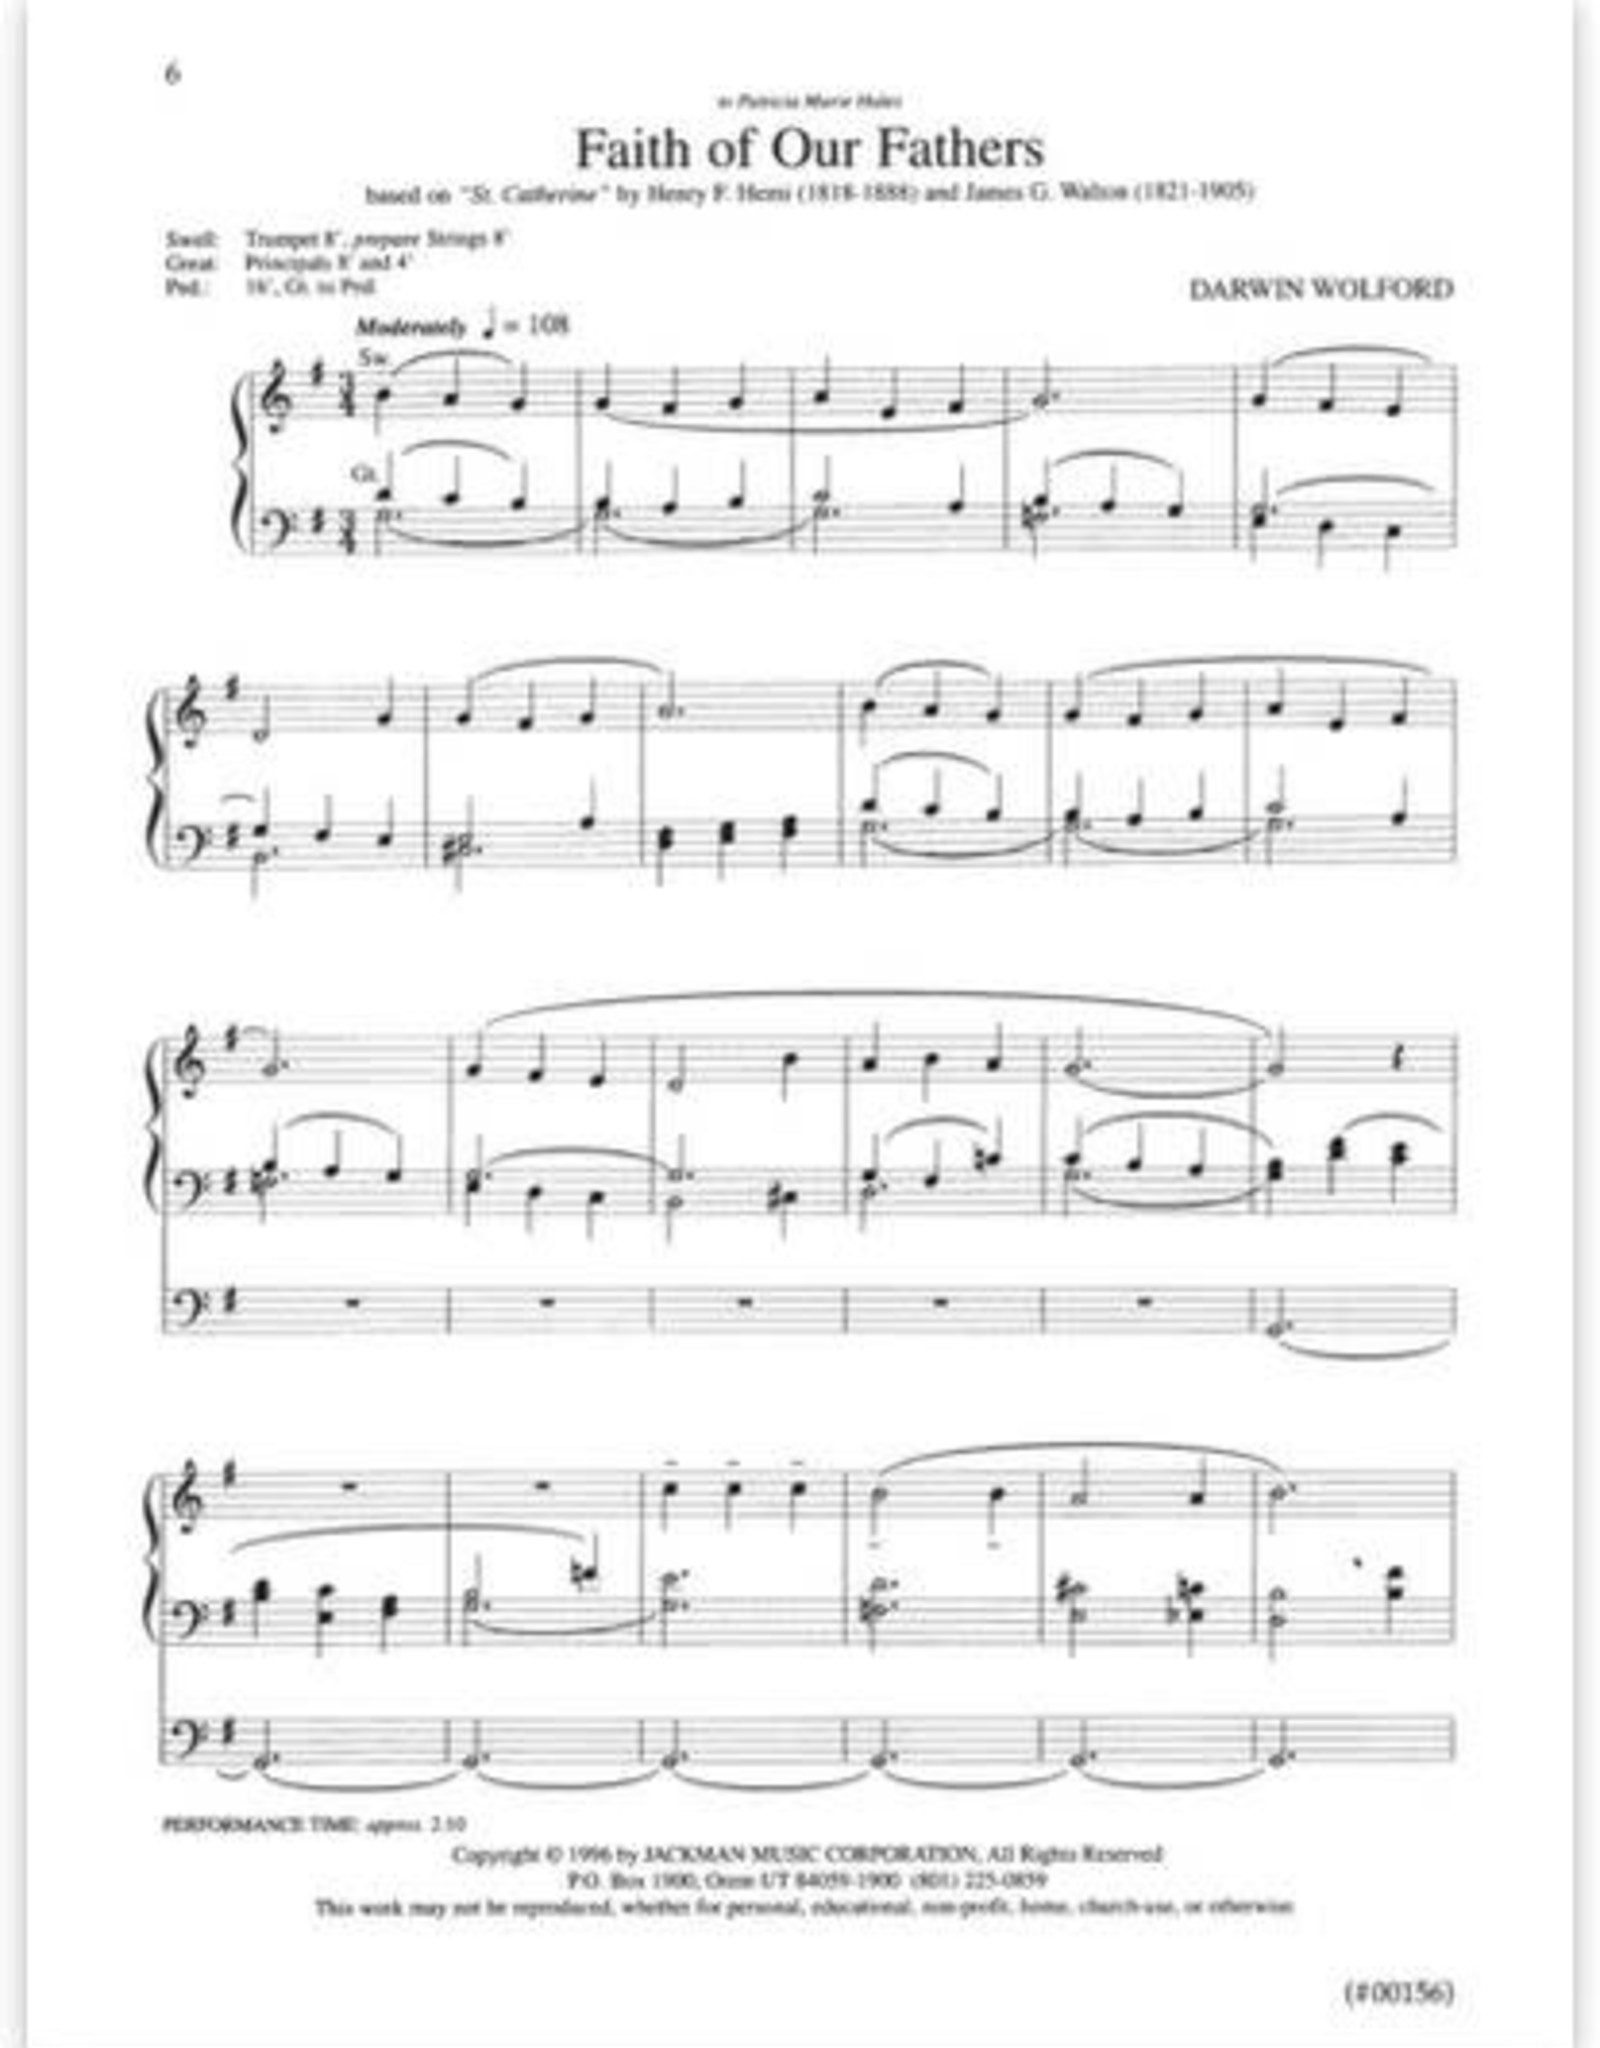 Jackman Music Ward Organist Music Library Volume 1